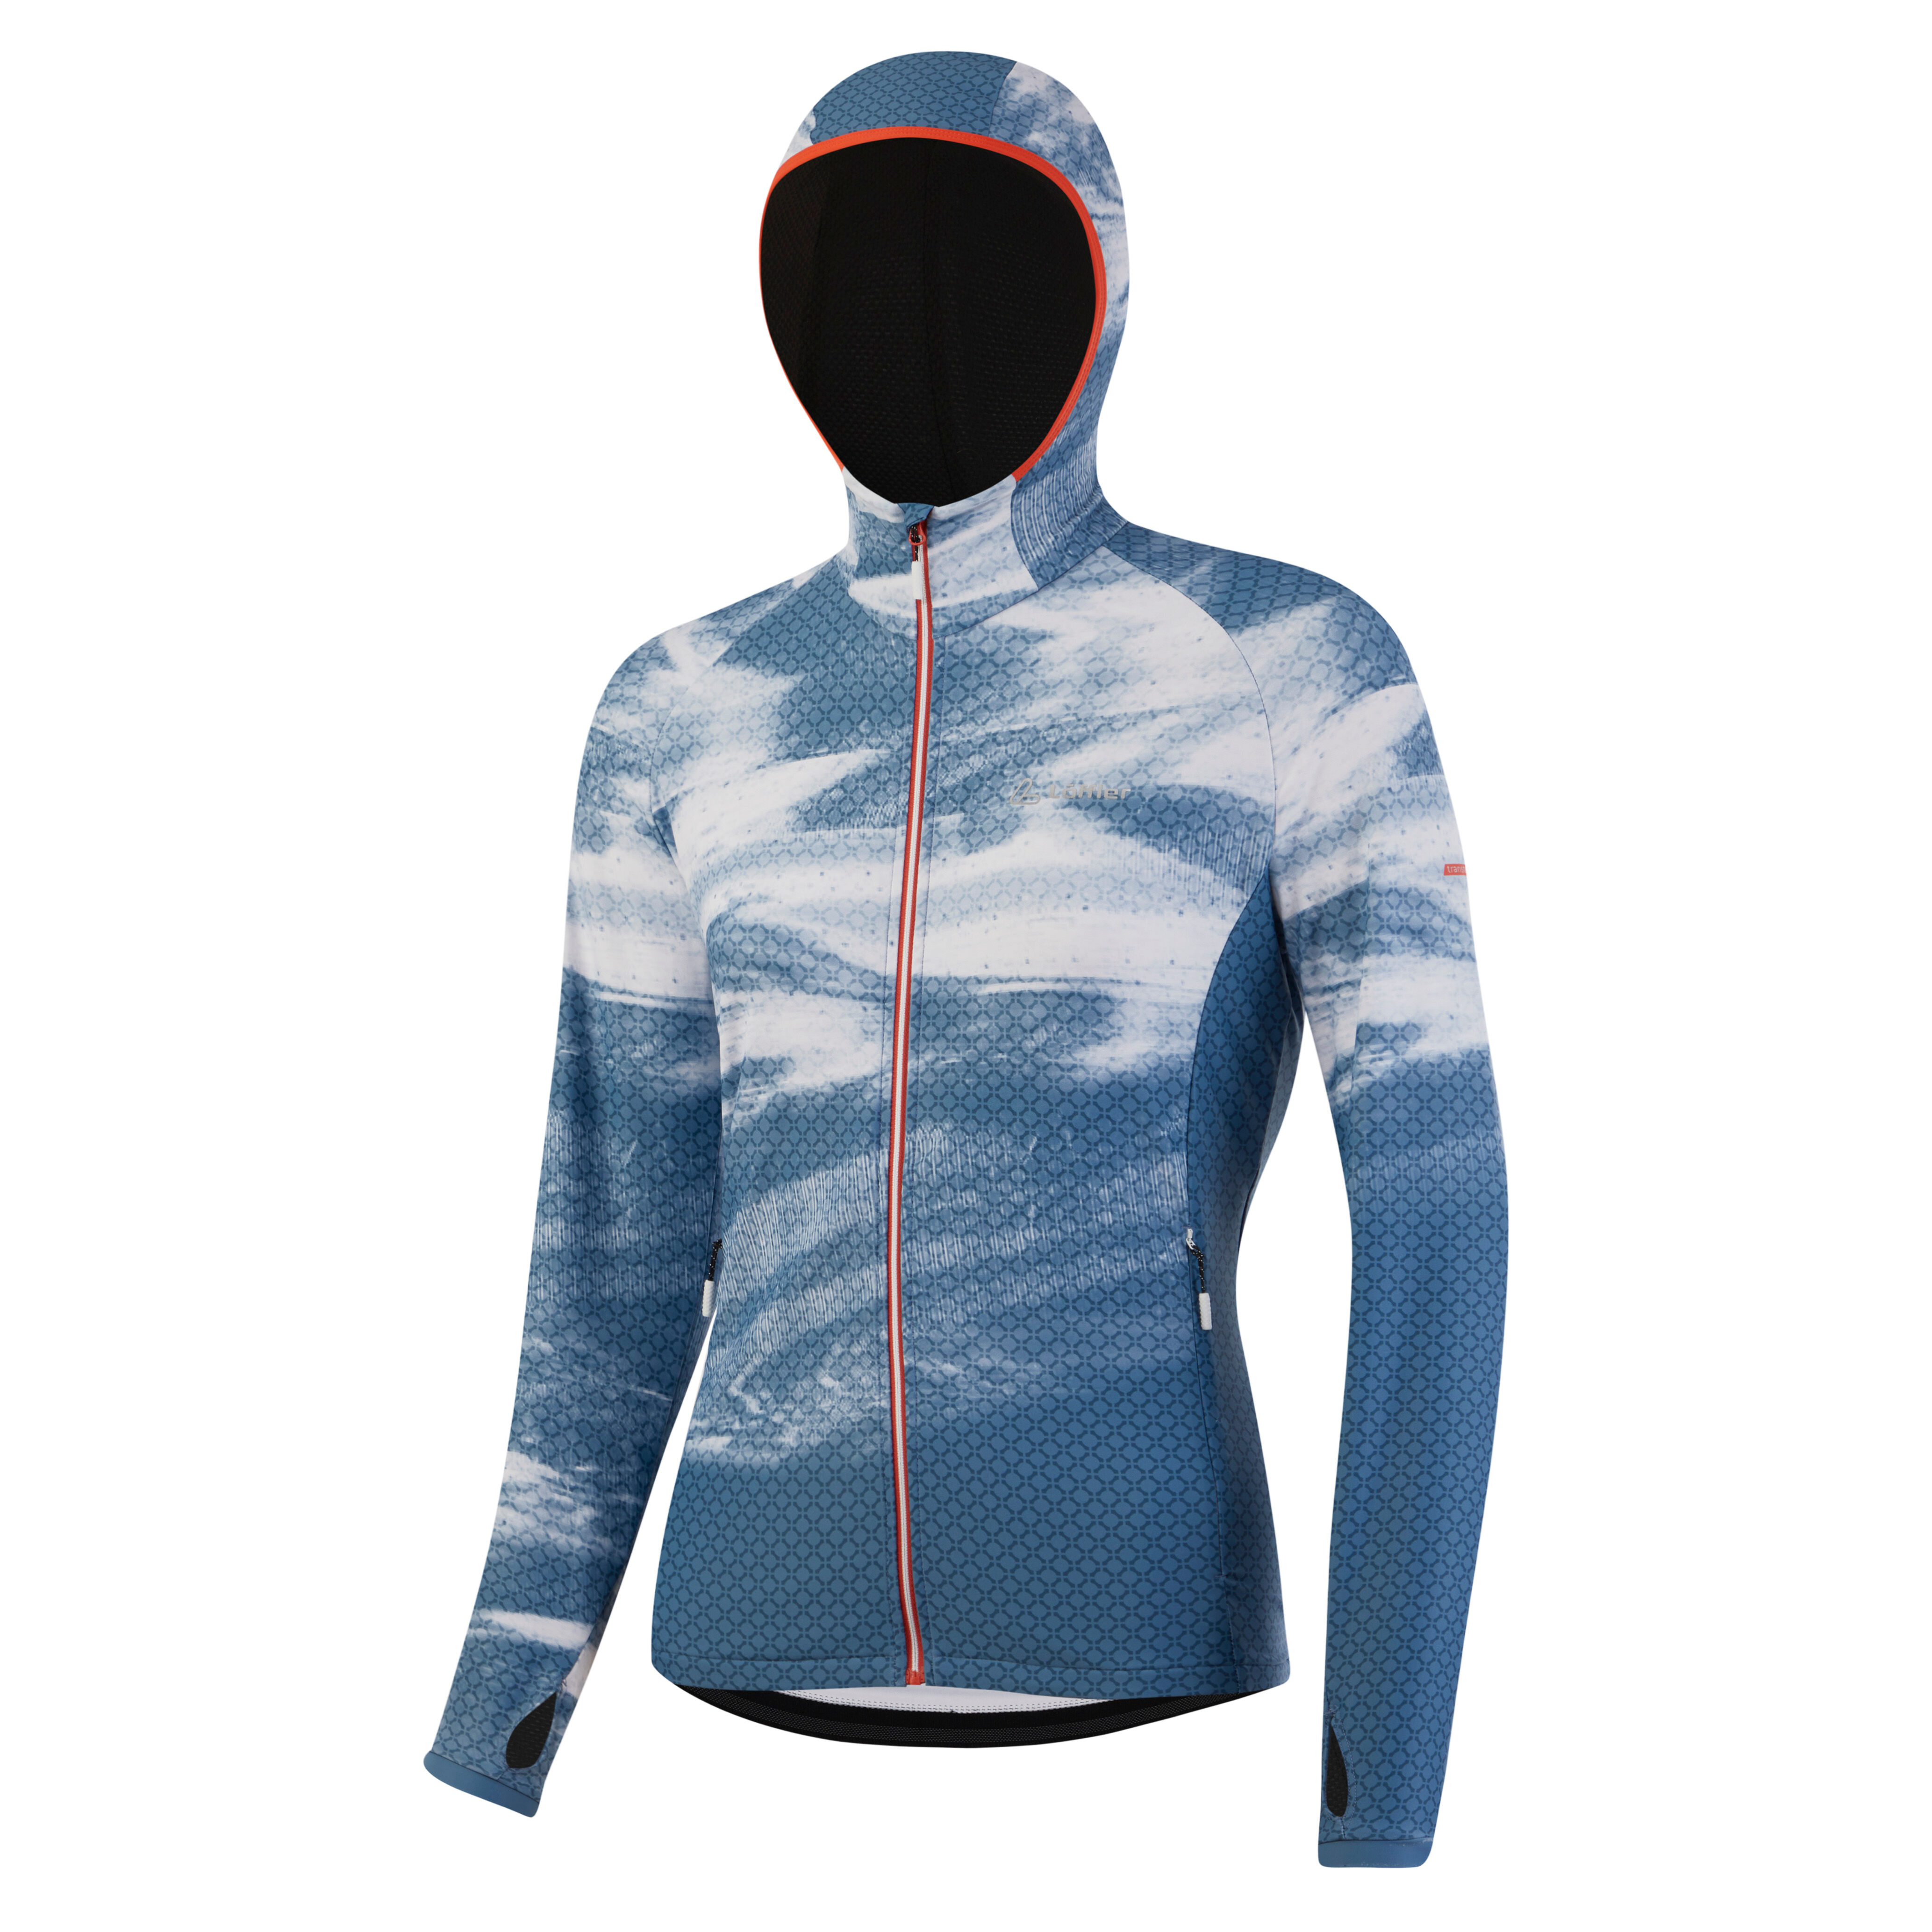 Loeffler Hoody Fz Speed Rew - Cross-country ski jacket - Women's